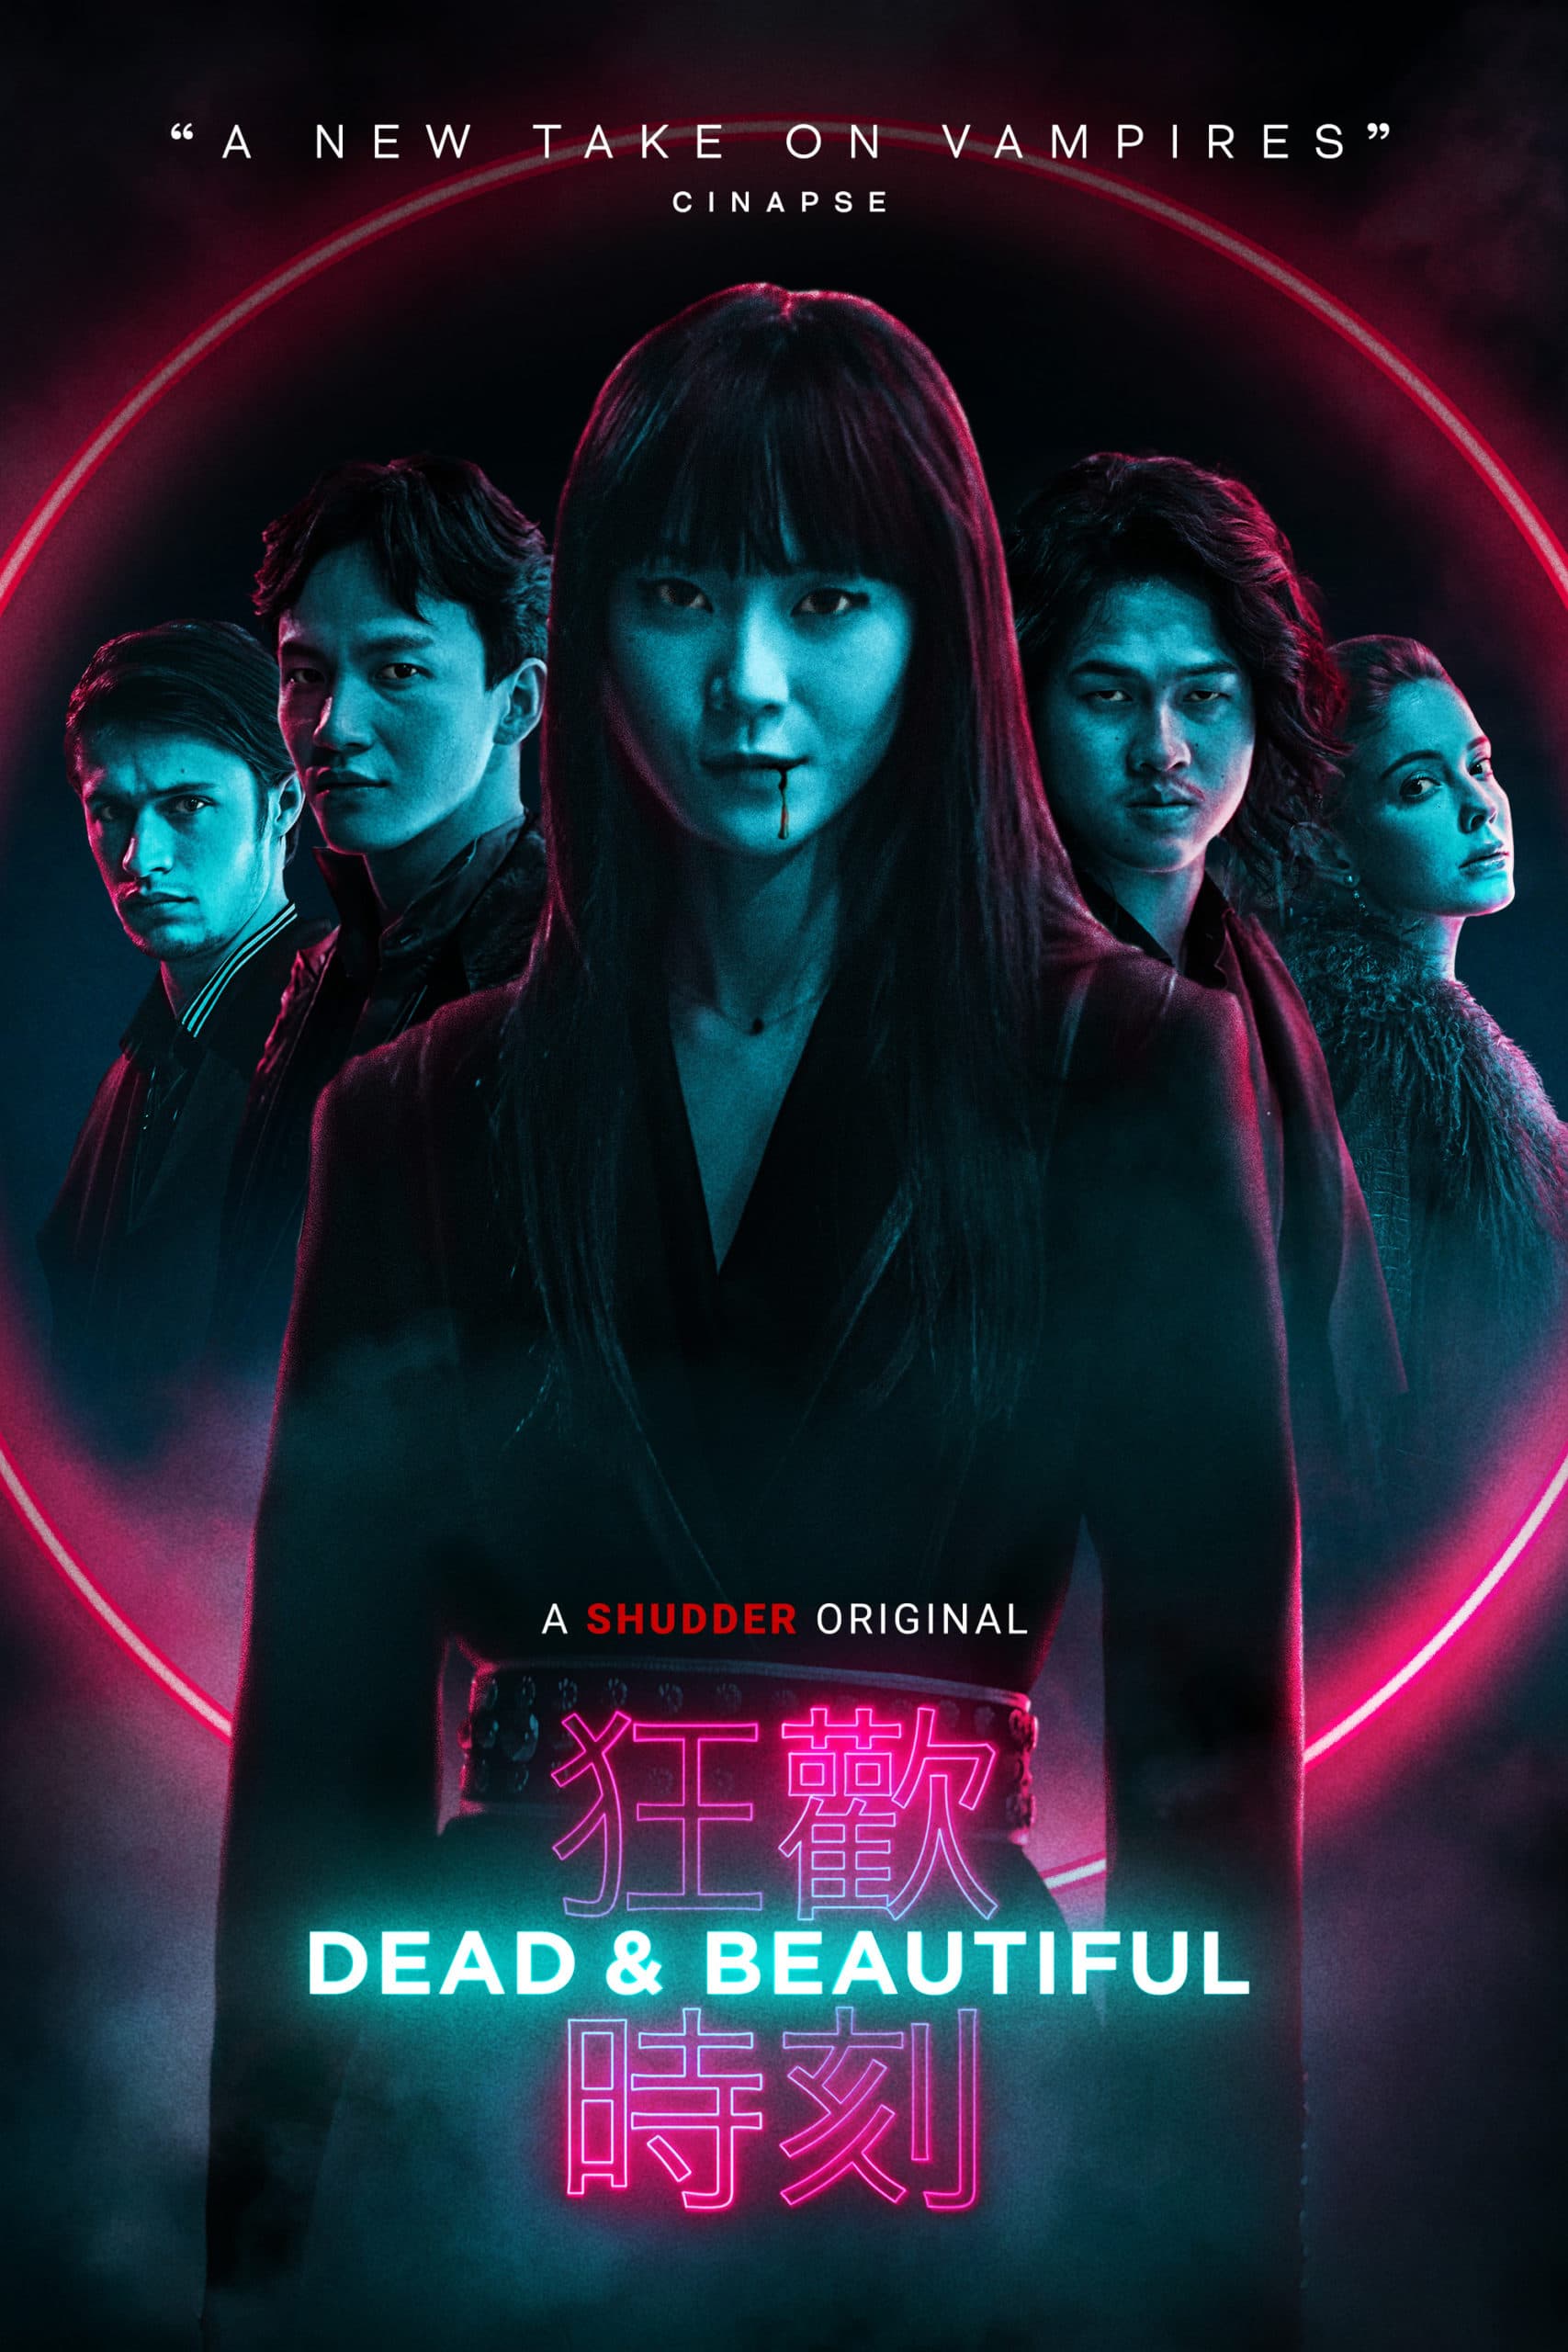 Dead & Beautiful Film Poster - Credit: AMC's Shudder